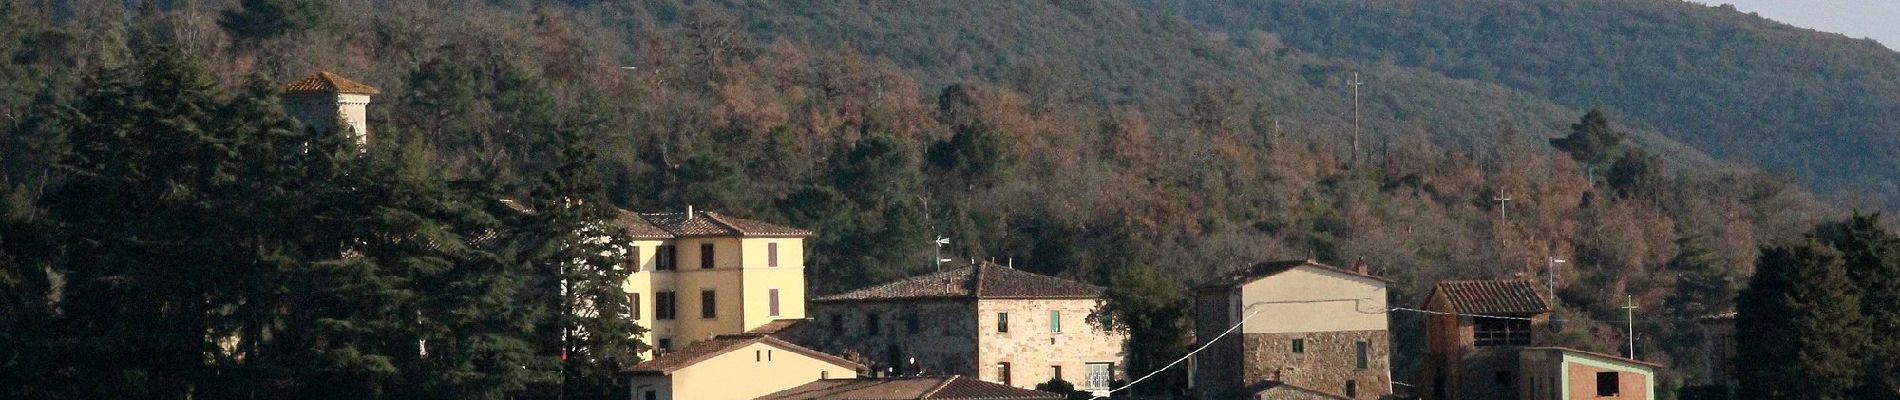 Tocht Te voet Gaiole in Chianti - Trekking tra i castelli 8 - Photo